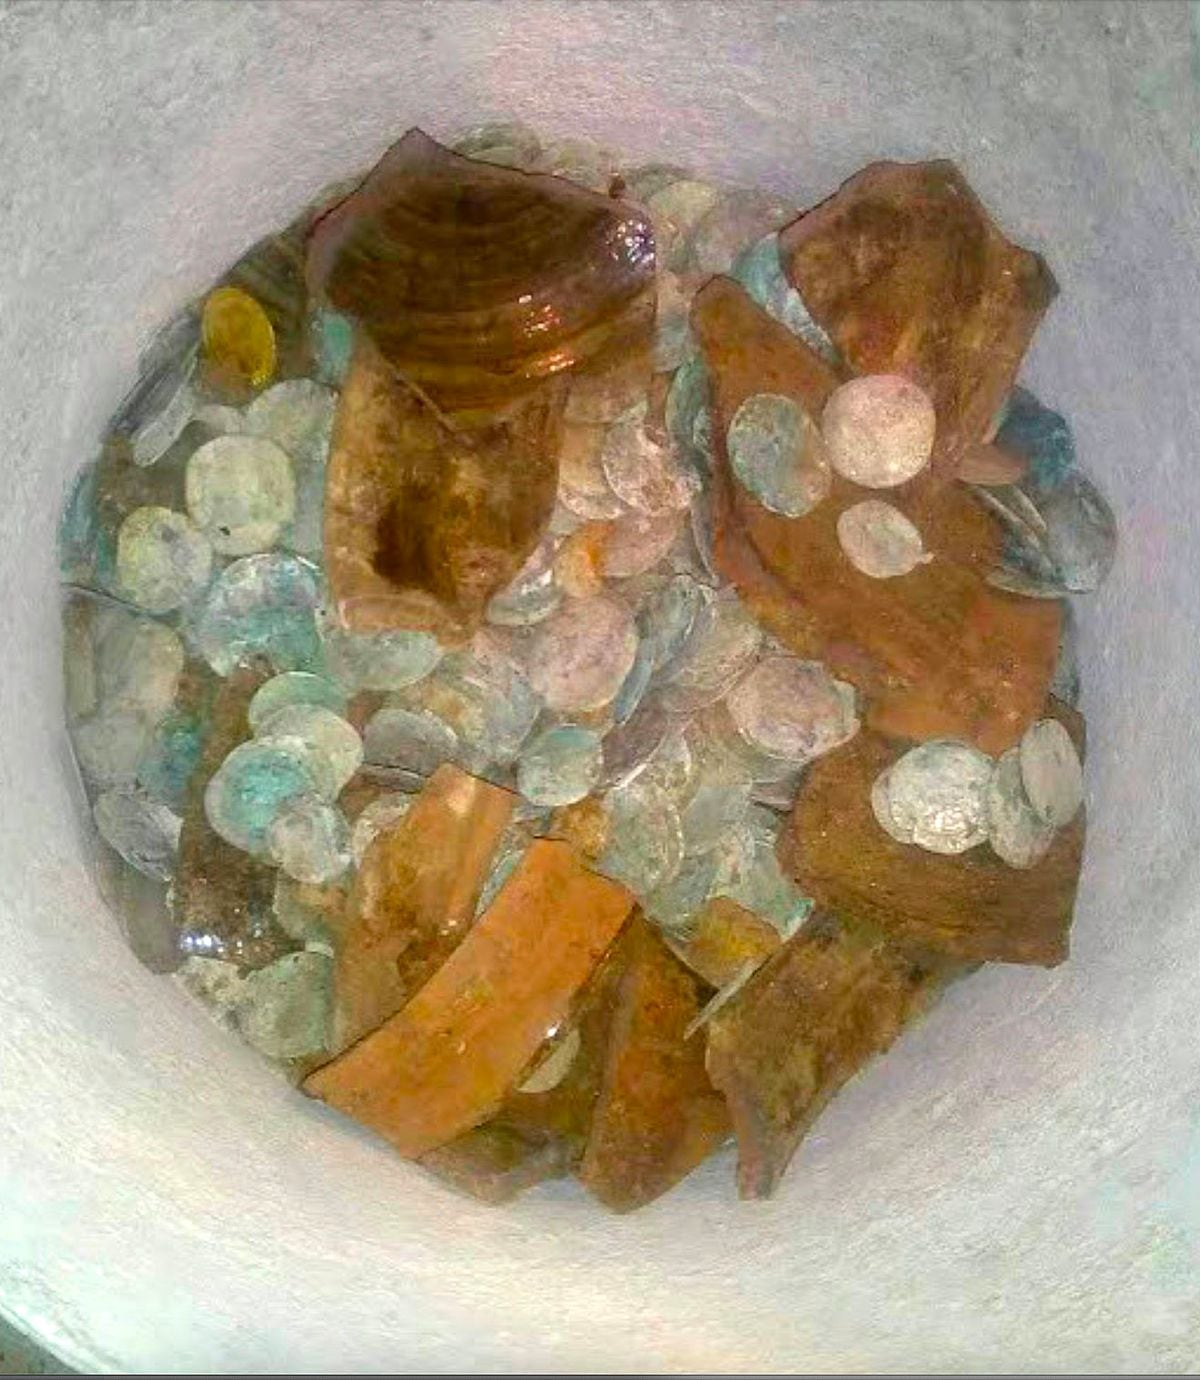 El recipiente de monedas (Imagen: Duke'sAuctions/BNPS)